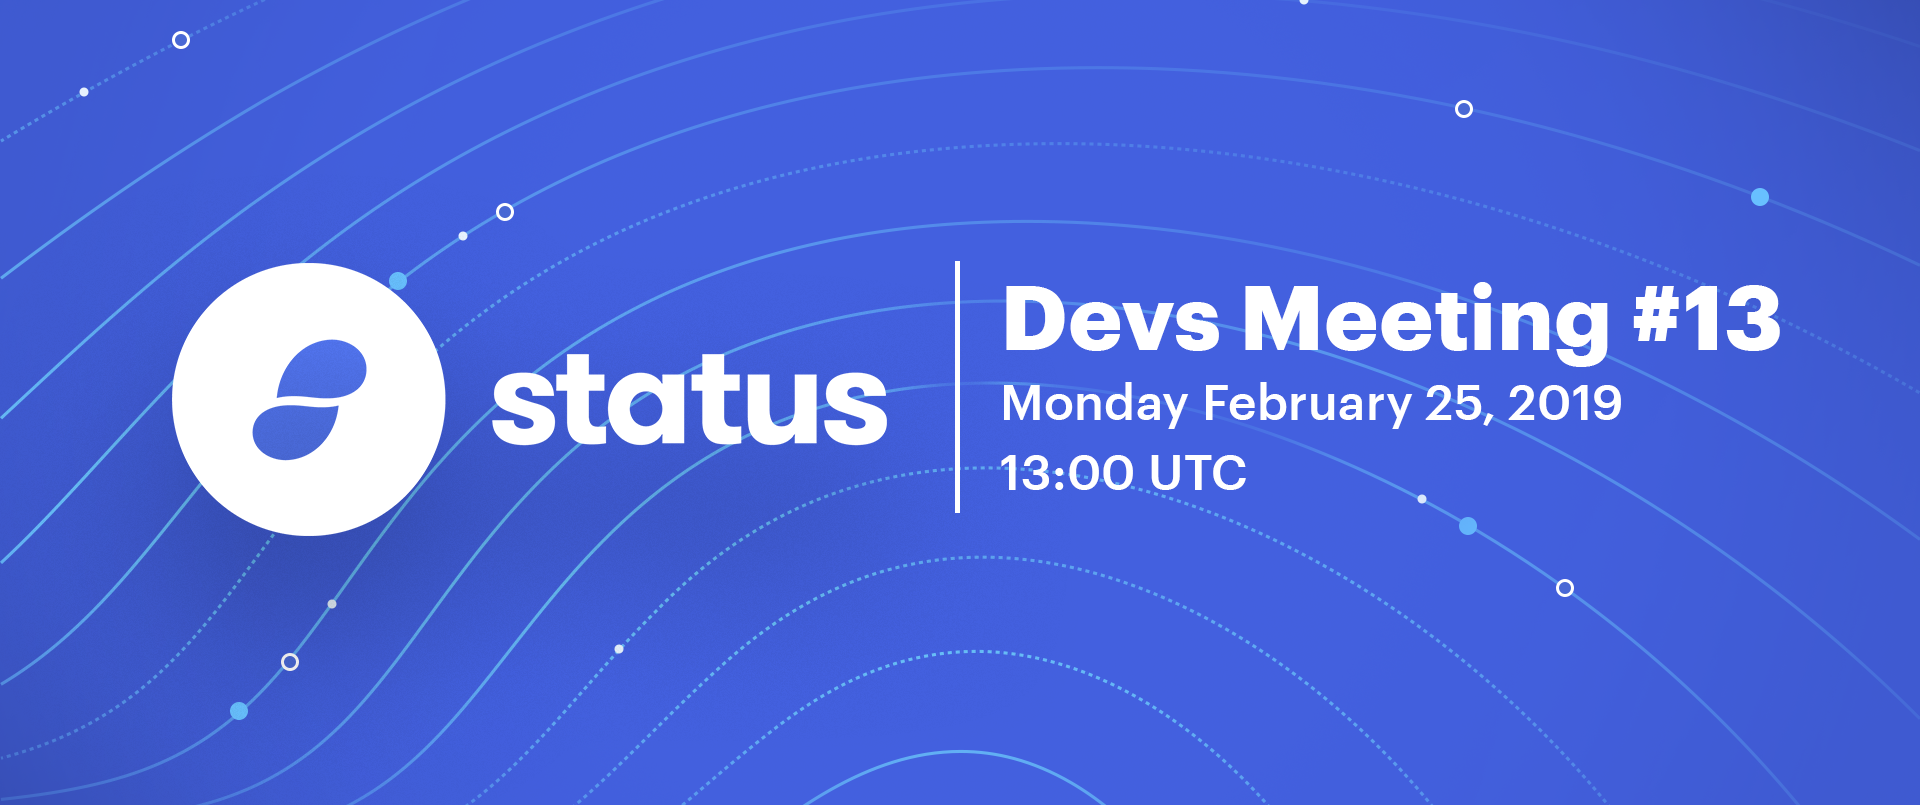 Status Devs Meeting #13 - Feb 25, 2019